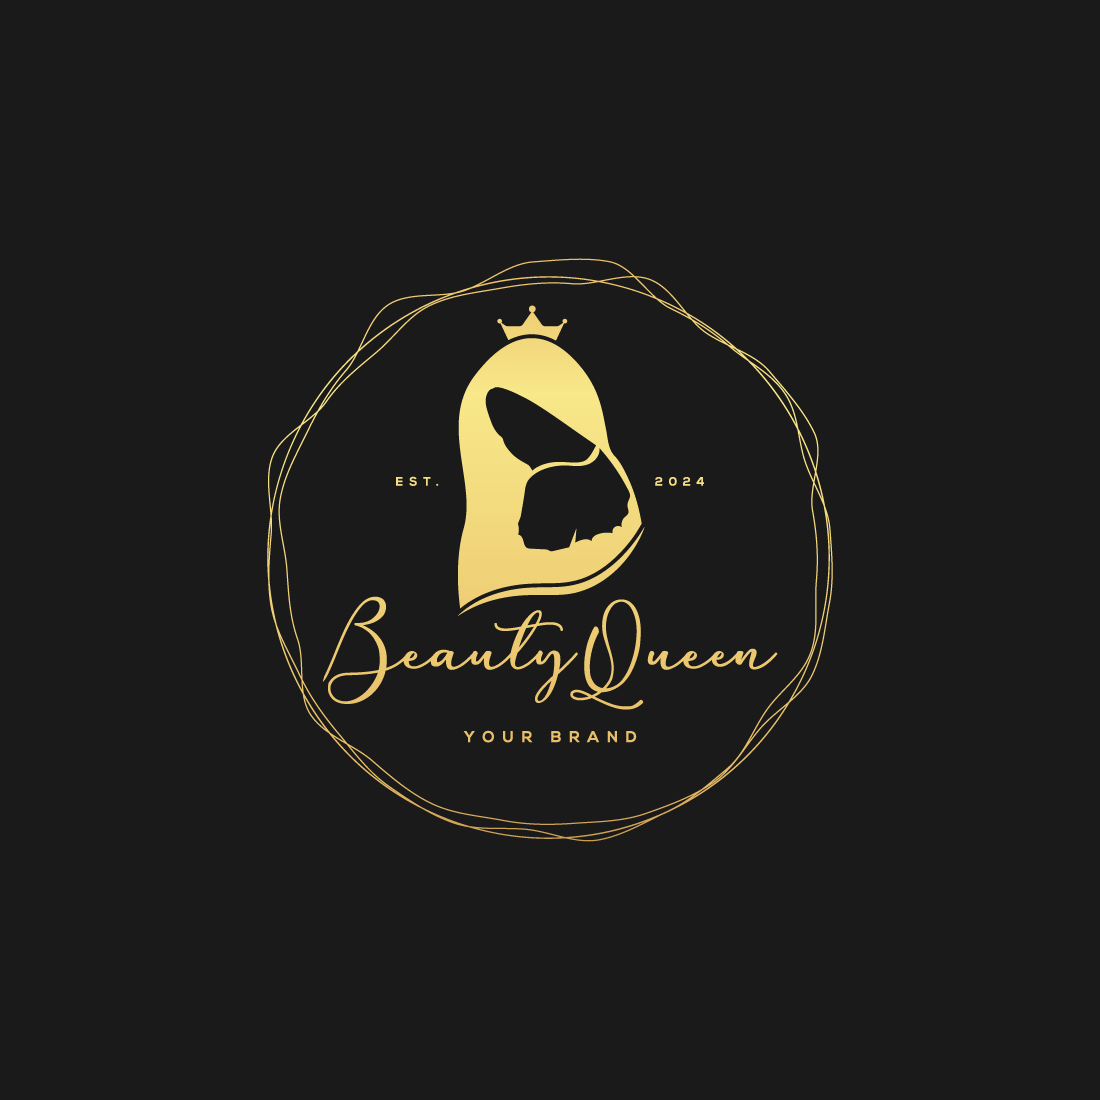 Beauty Queen logo design preview image.